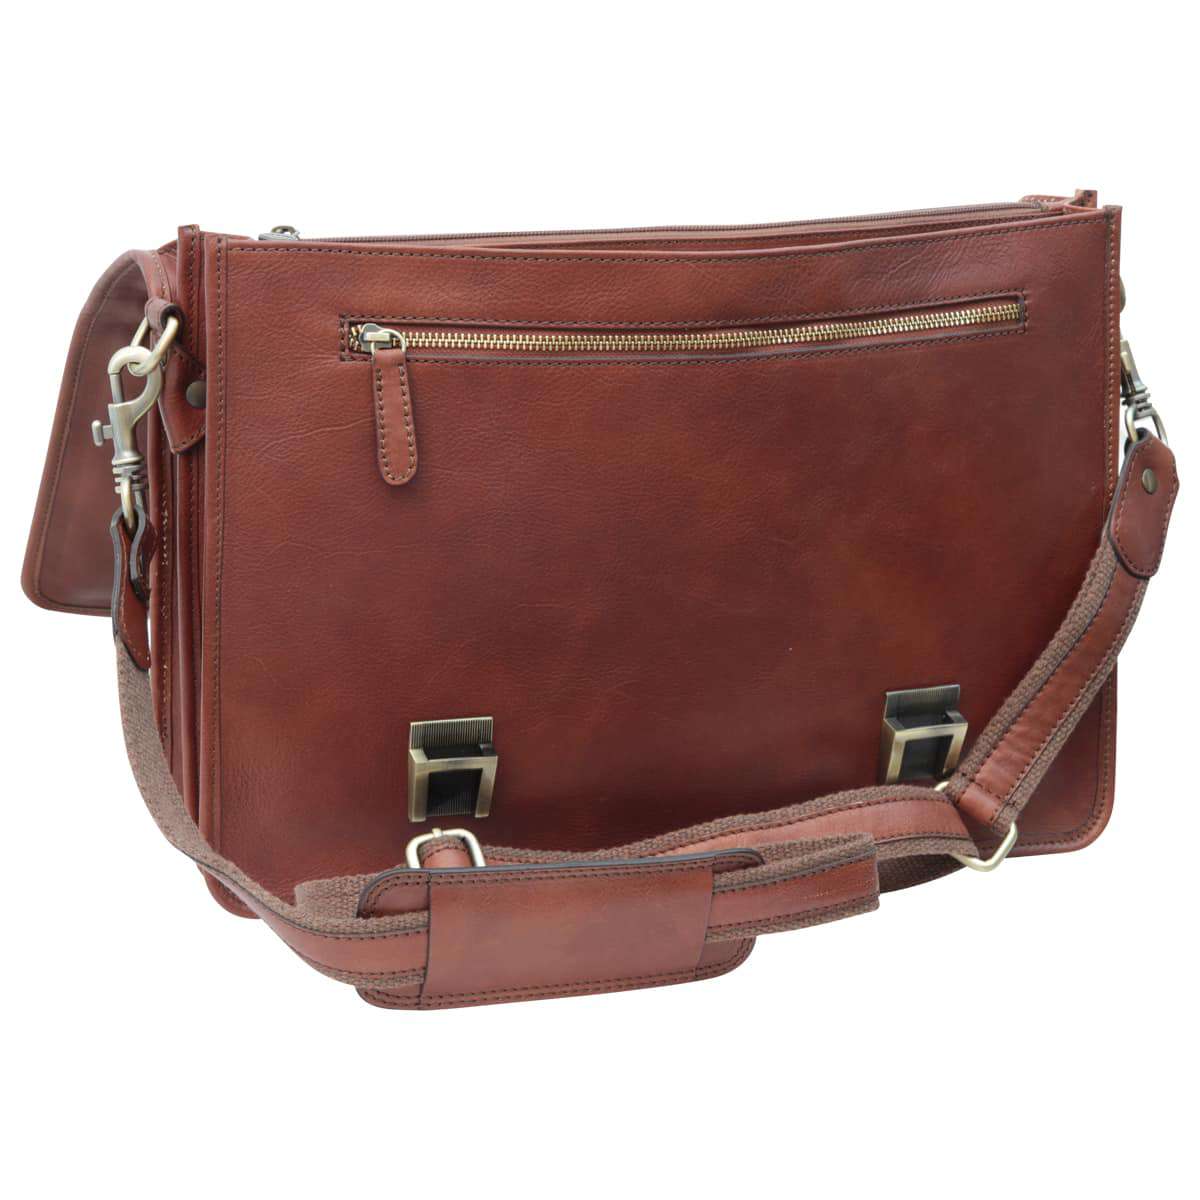 Soft Calfskin Leather Briefcase with shoulder strap - Brown | 030991MA US | Old Angler Firenze